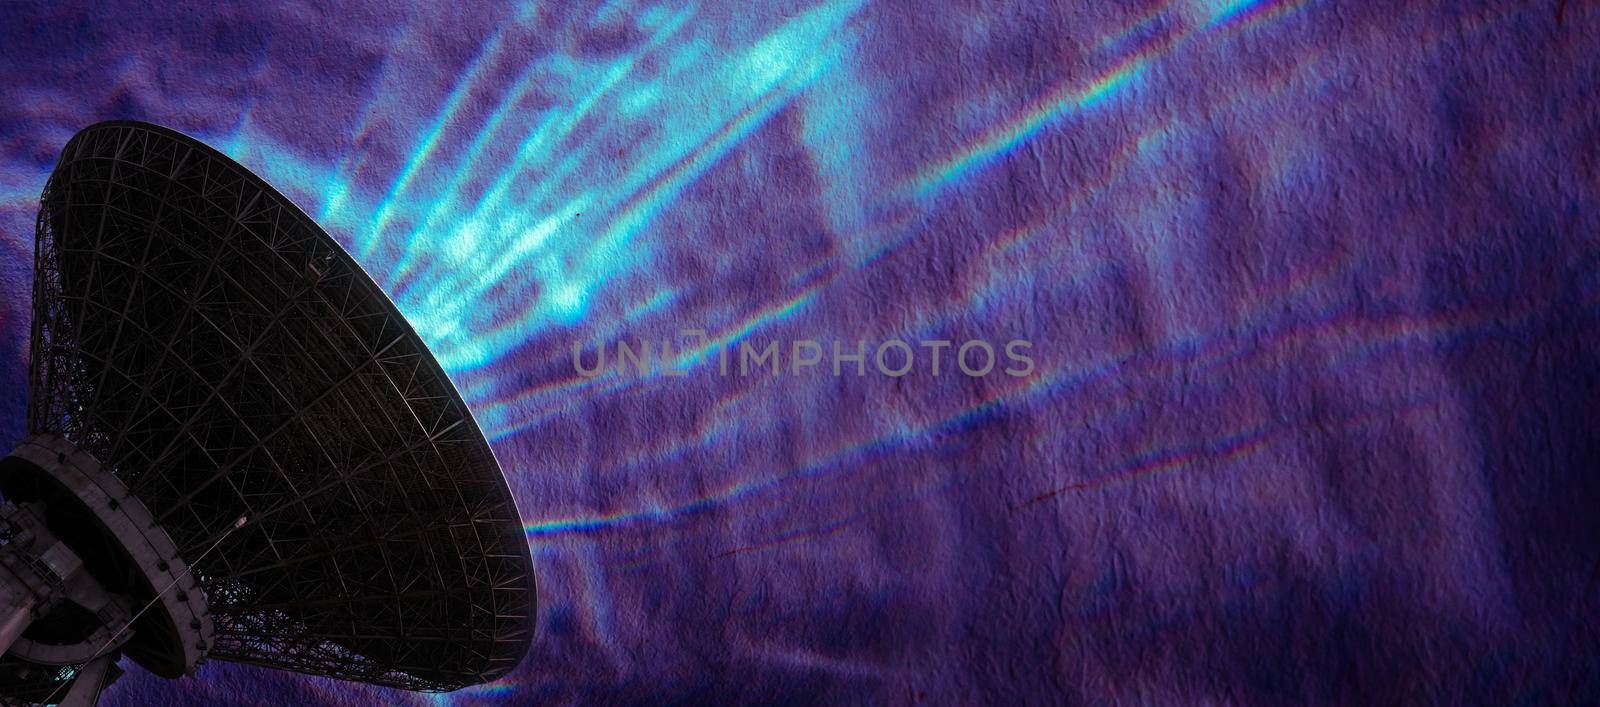 Panorama satellite dish on a purple abstract background. Cosmonautics Day, space exploration by lapushka62